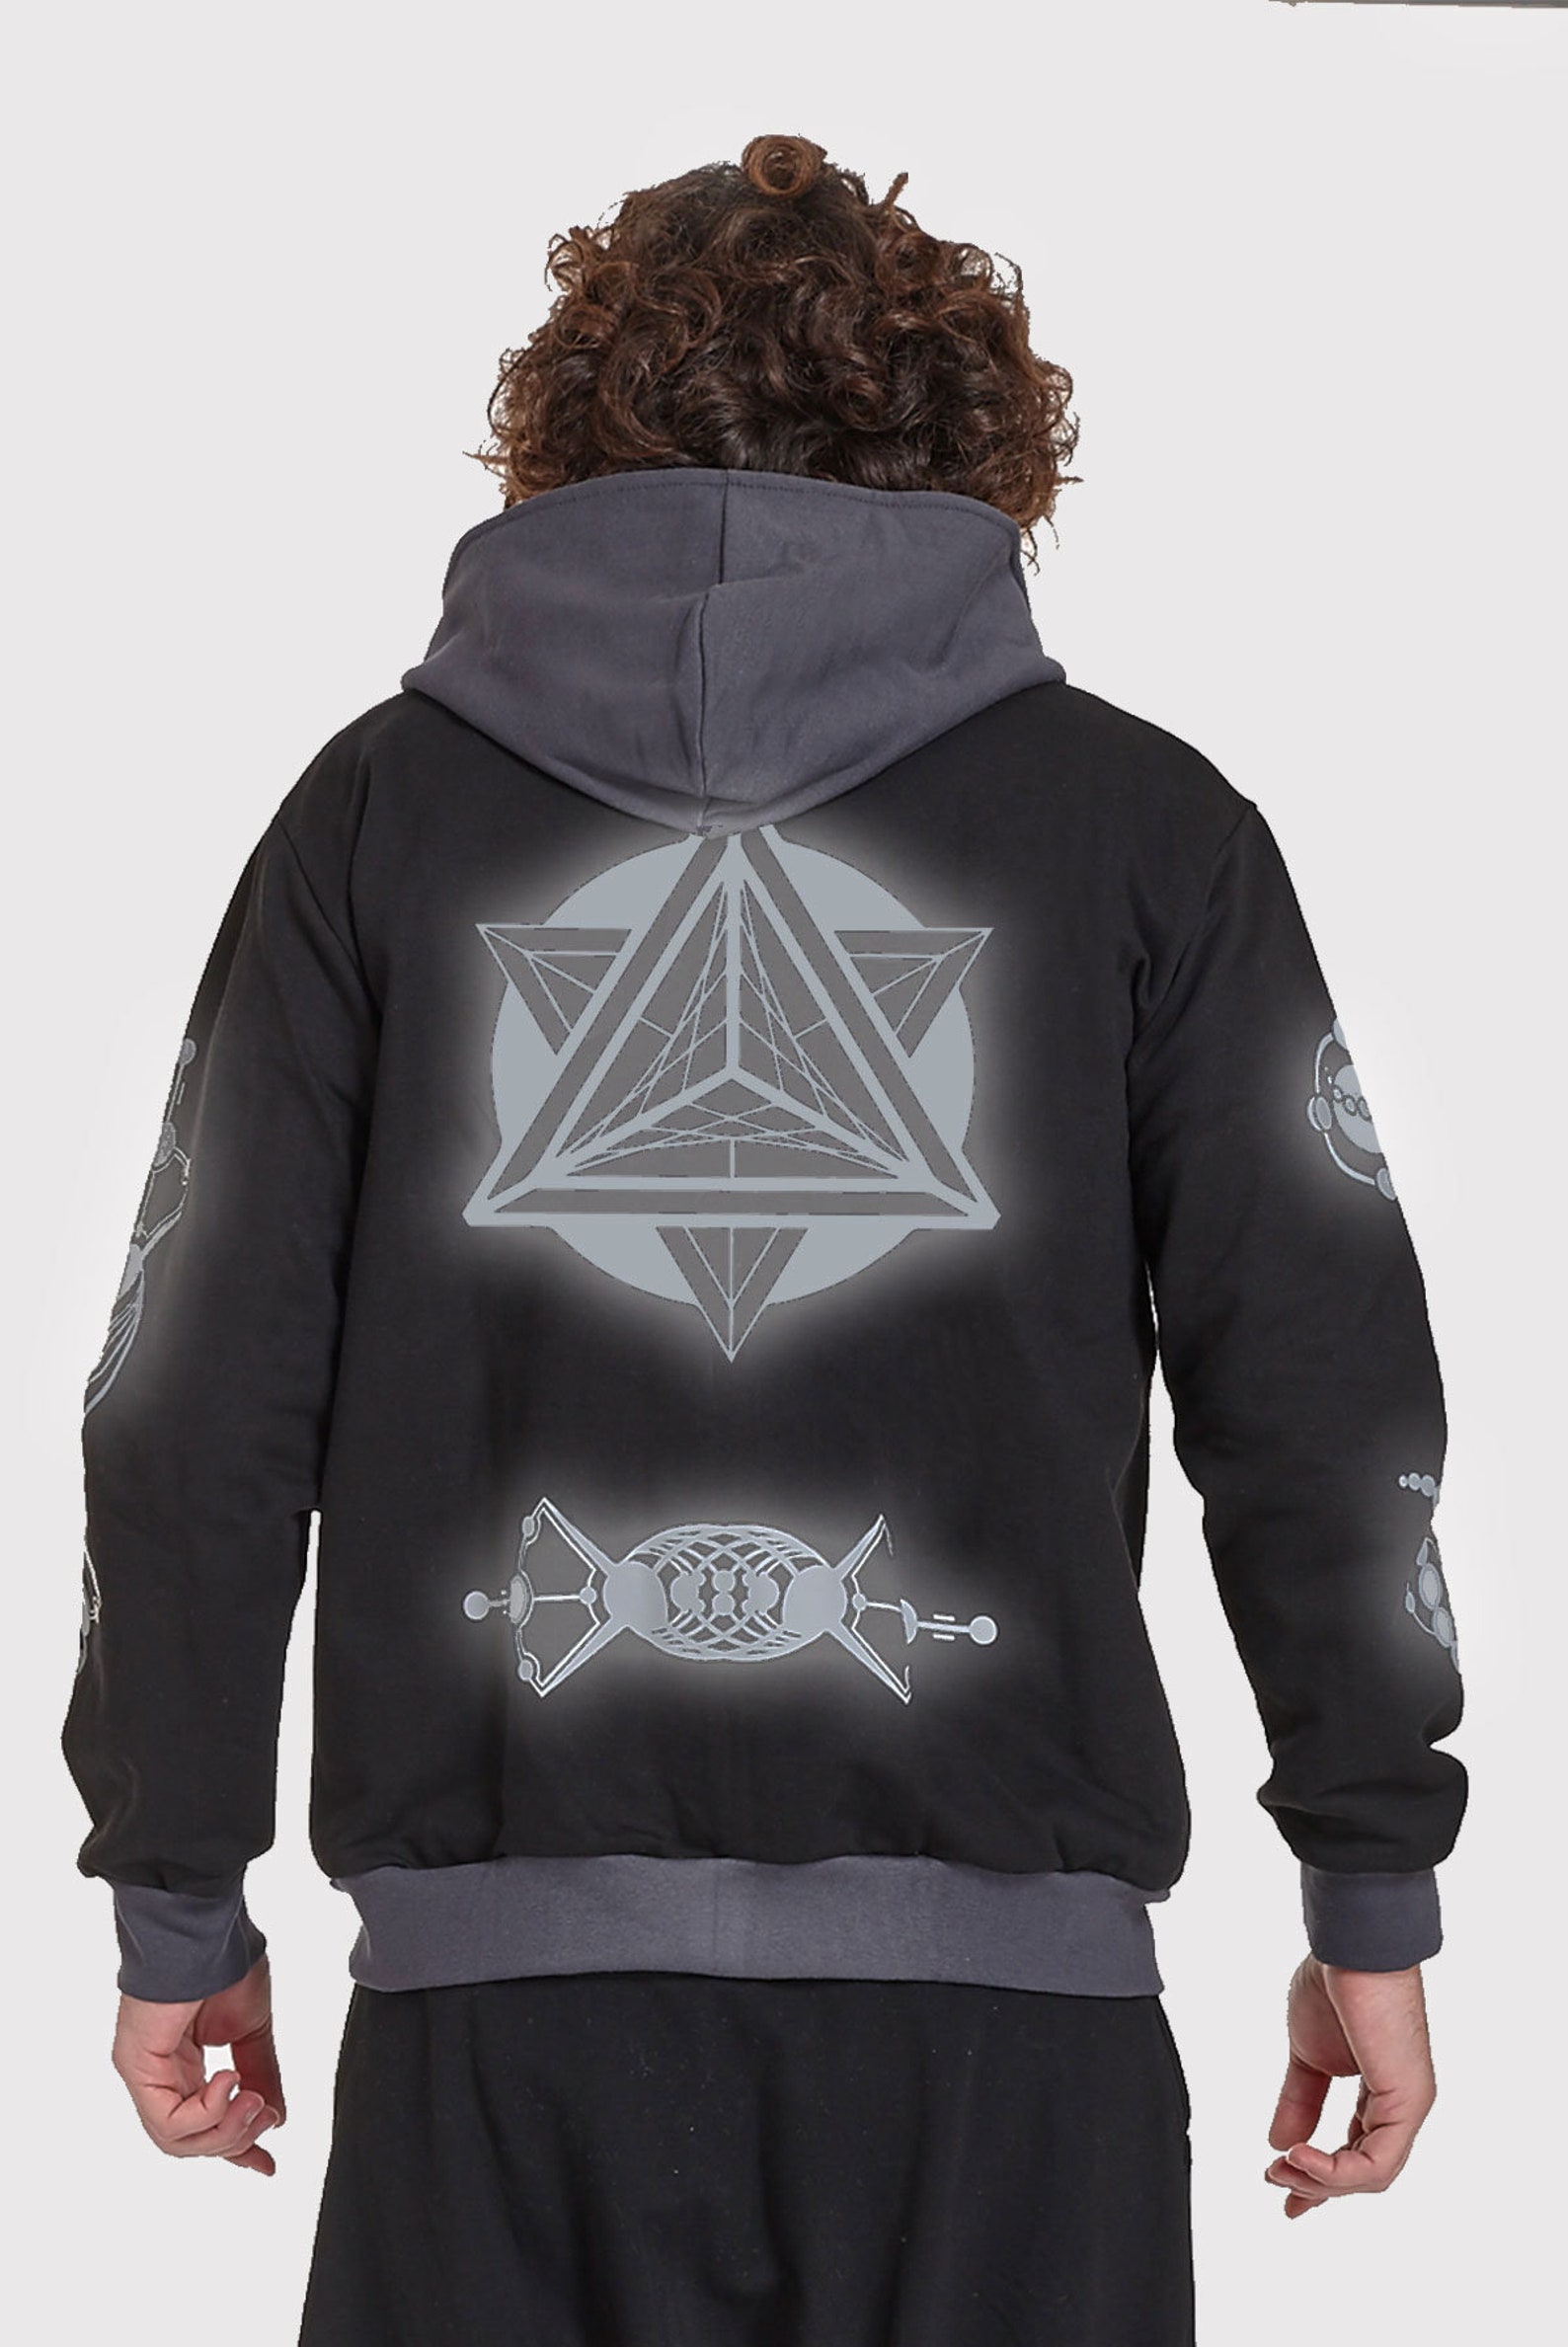 SIRIUS mens jacket hoodie with UV-active or REFLECT print crop | Etsy